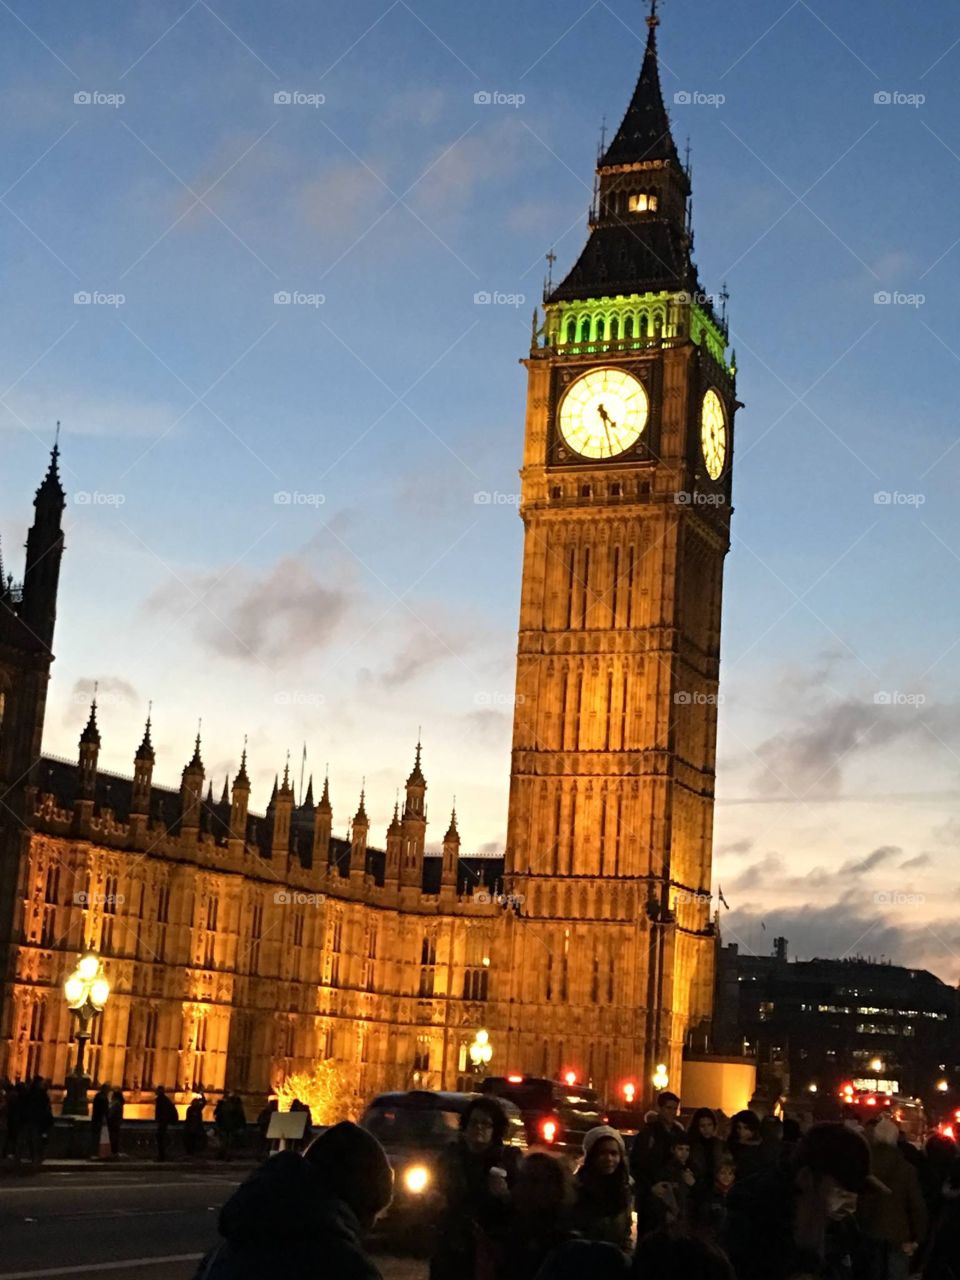 London Parliament and Big Ben Illuminated.